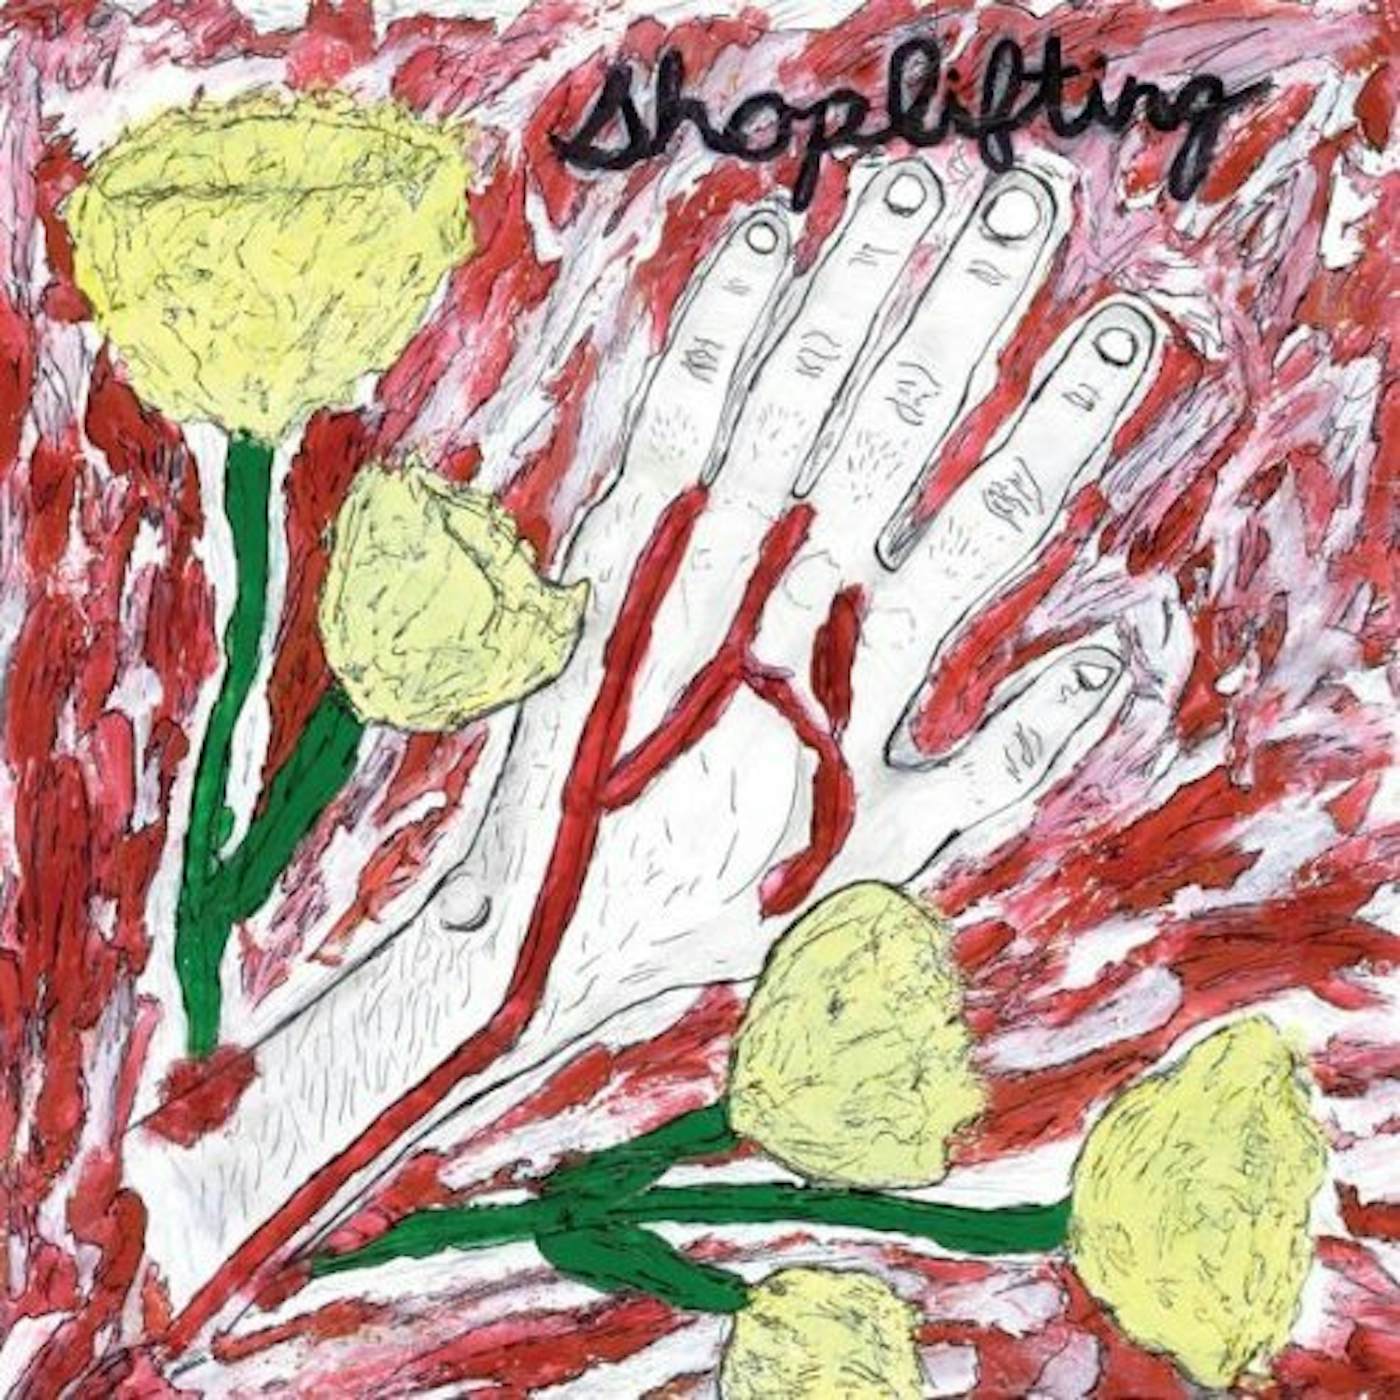 Shoplifting BODY STORIES CD